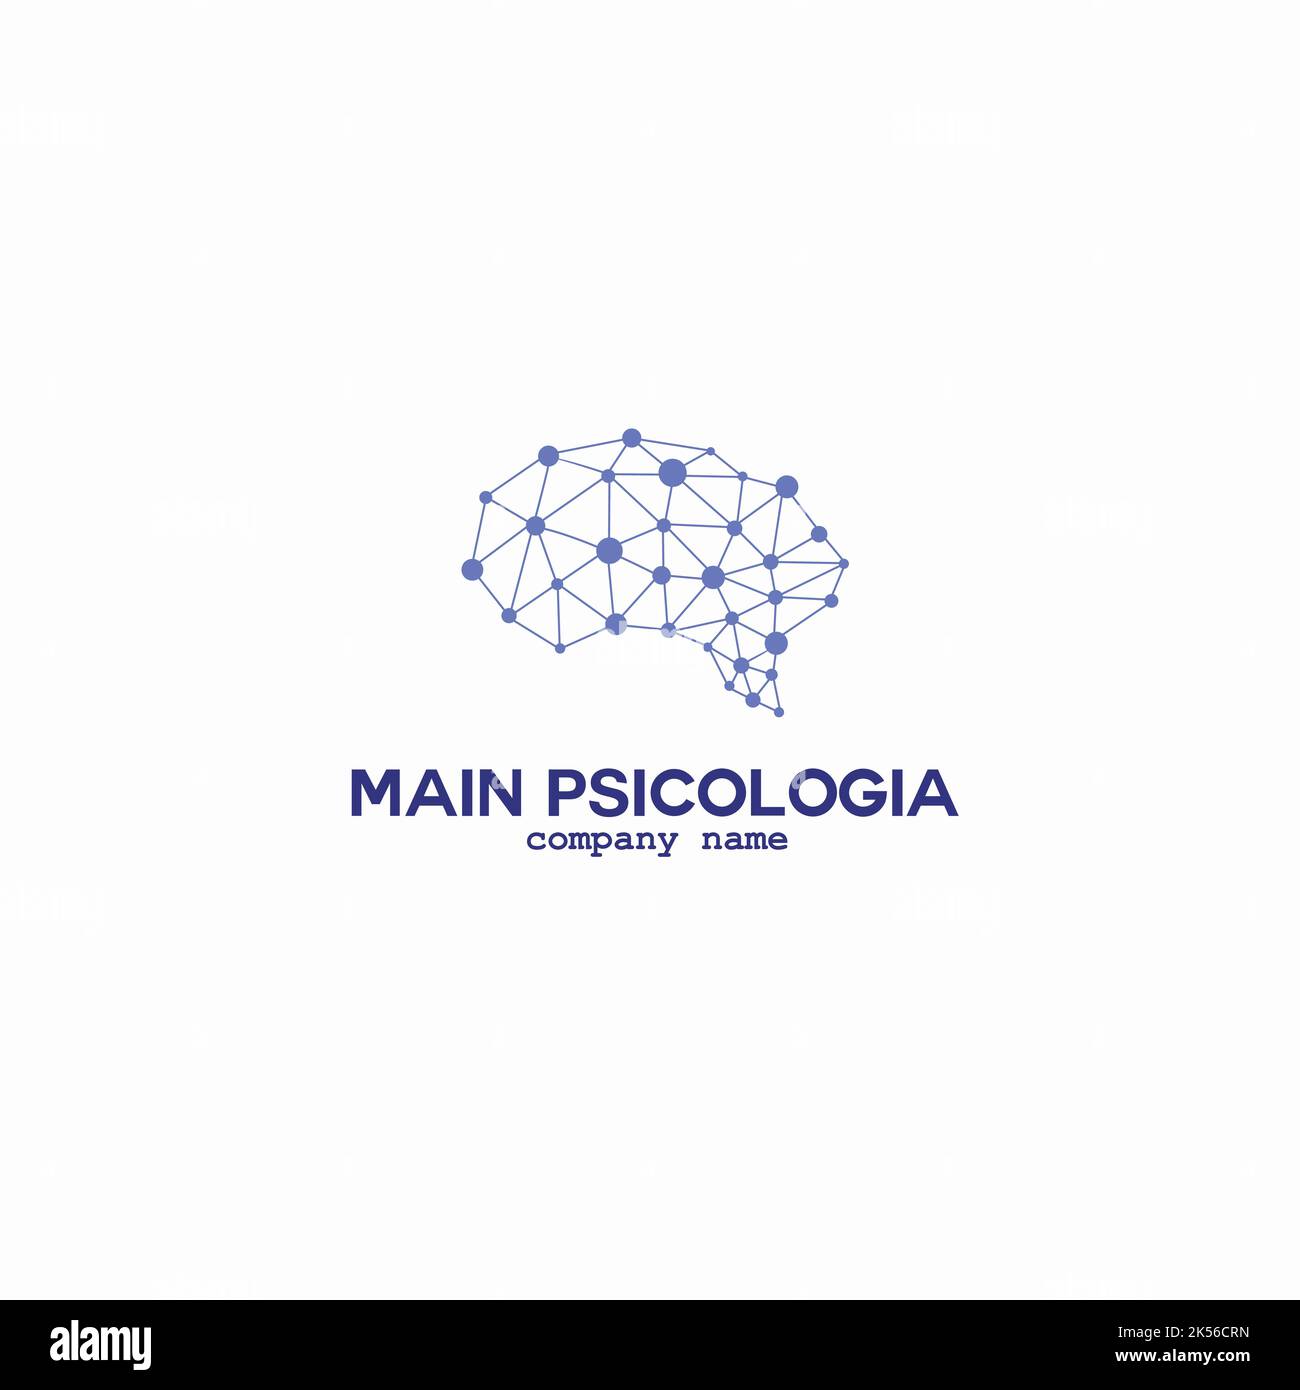 main psicologia exclusive logo design inspiration Stock Vector